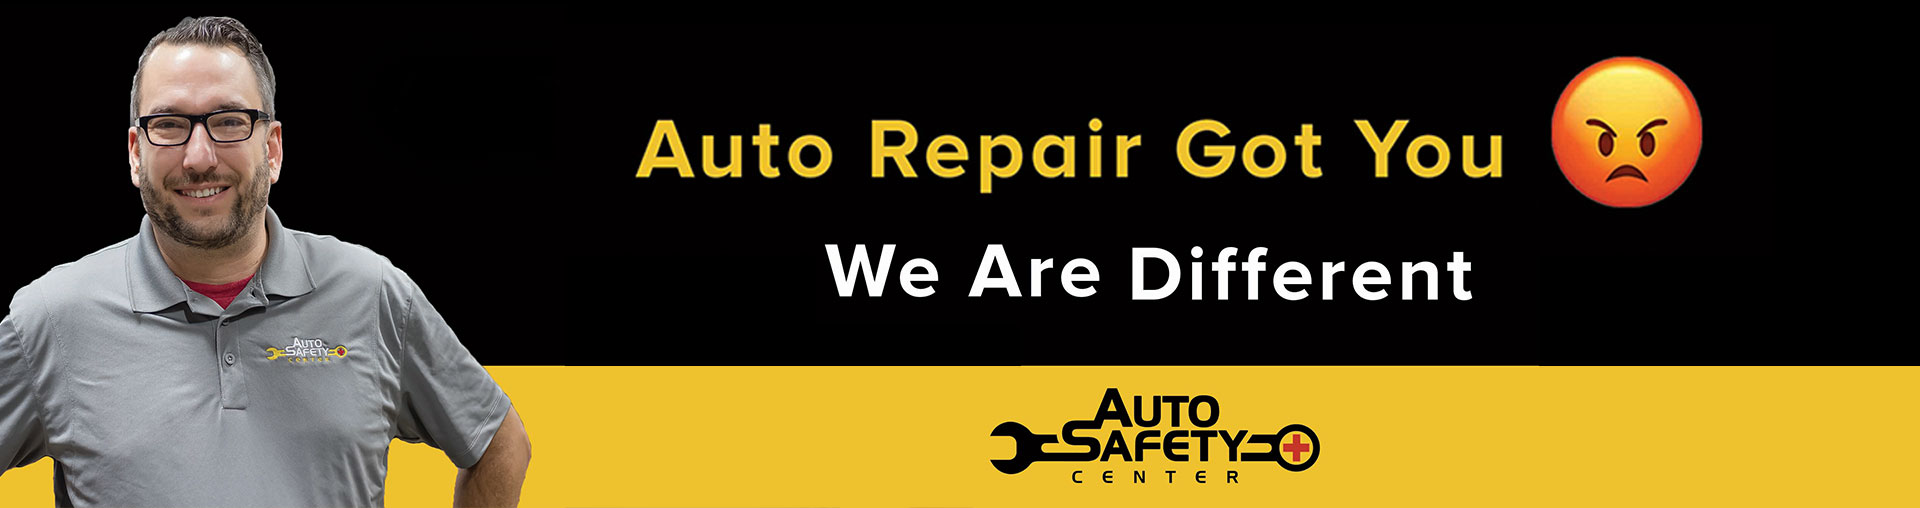 West Bend Auto Repair - Auto Safety Center